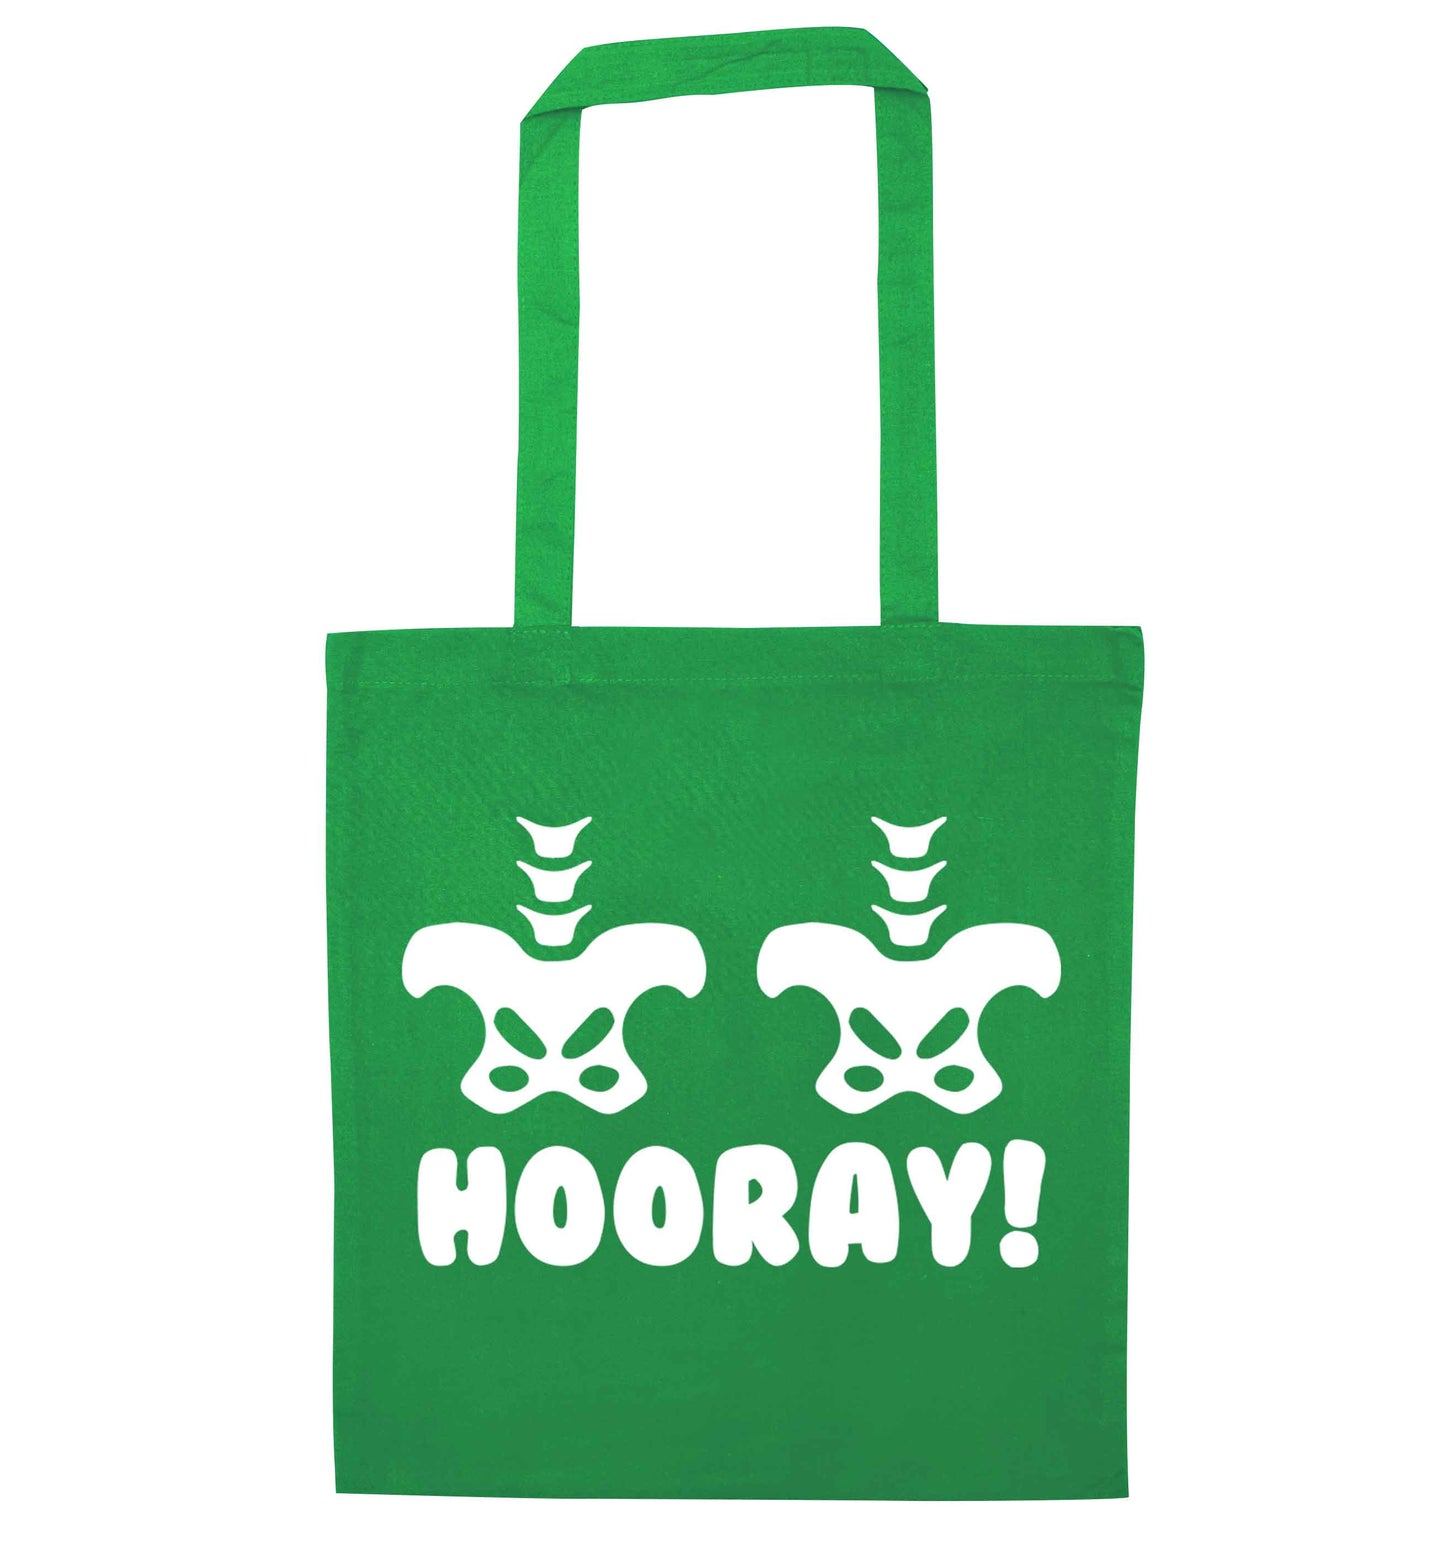 Hip Hip Hooray! green tote bag